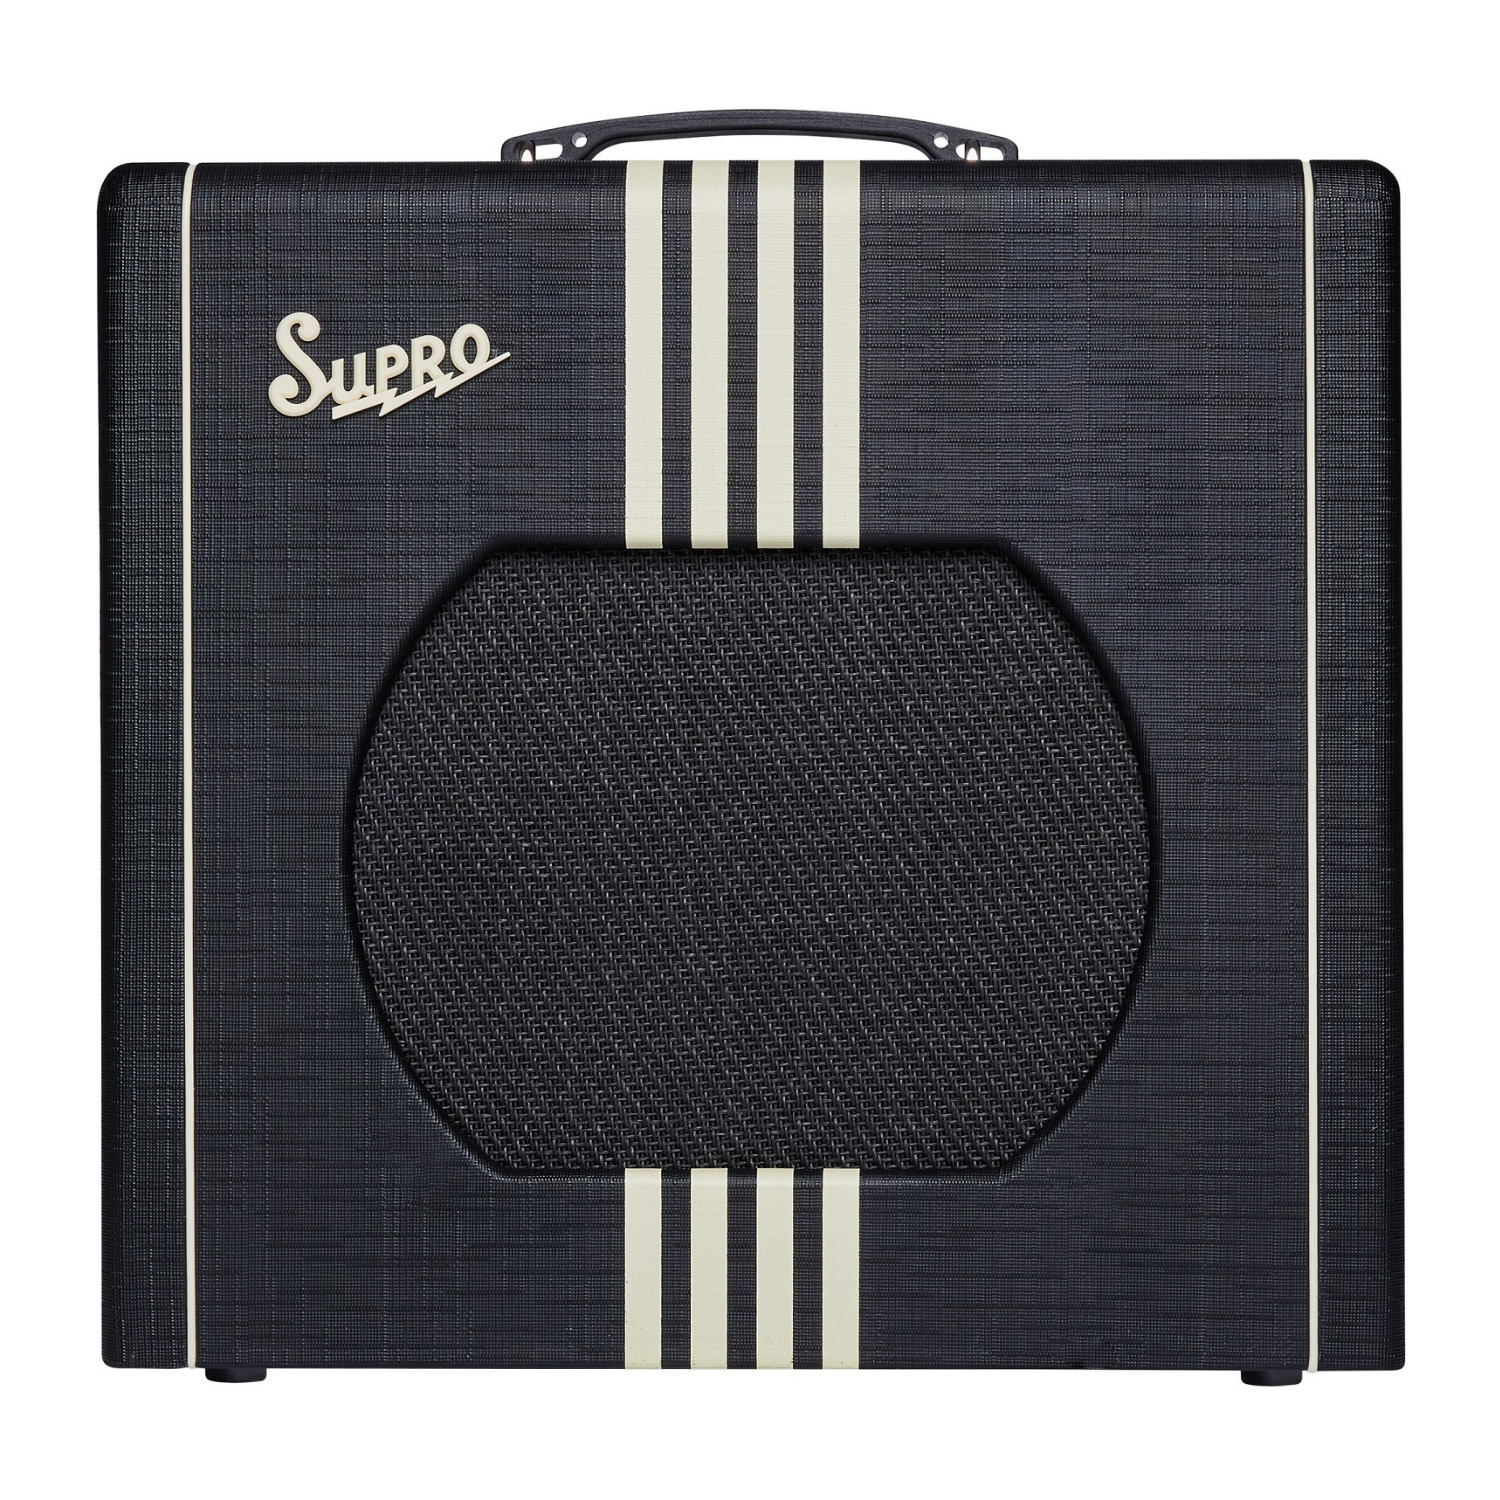 Supro Delta King 12 15-Watt 1x12-Inch Tube Guitar Combo Amp (Black and Cream) in Black/Cream -  1822RBC